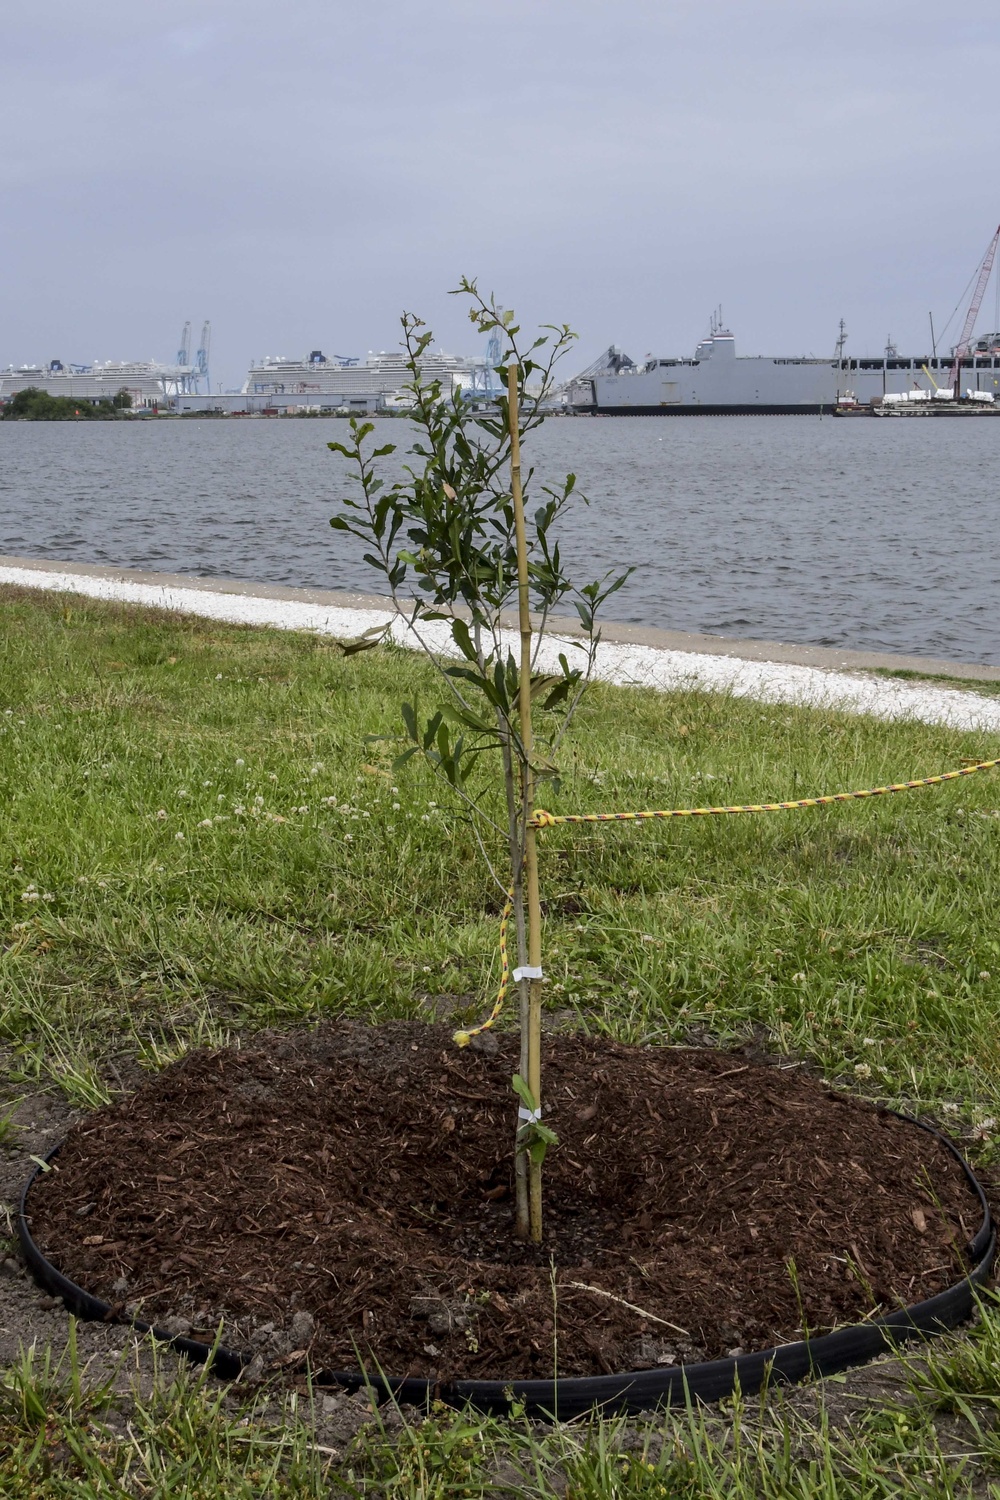 NMCP Staff Plants Tree in Memory of Coworker